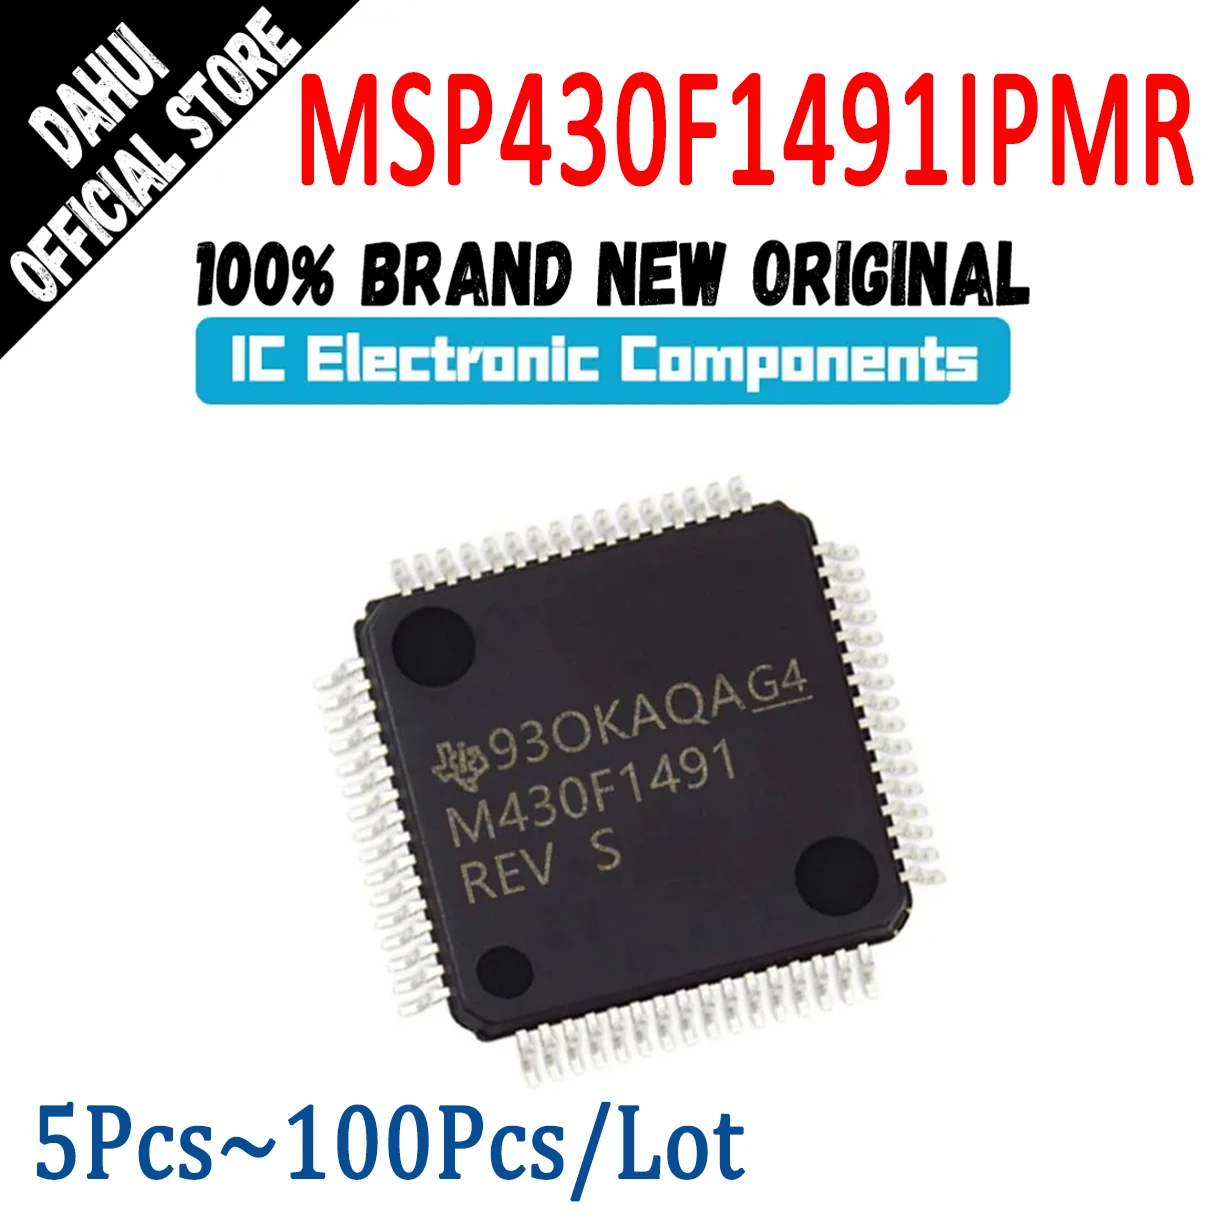 

MSP430F1491IPMR M430F1491 MSP430F1491 MSP430F MSP430 MSP IC Chip MCU LQFP-64 In Stock 100% New Originl